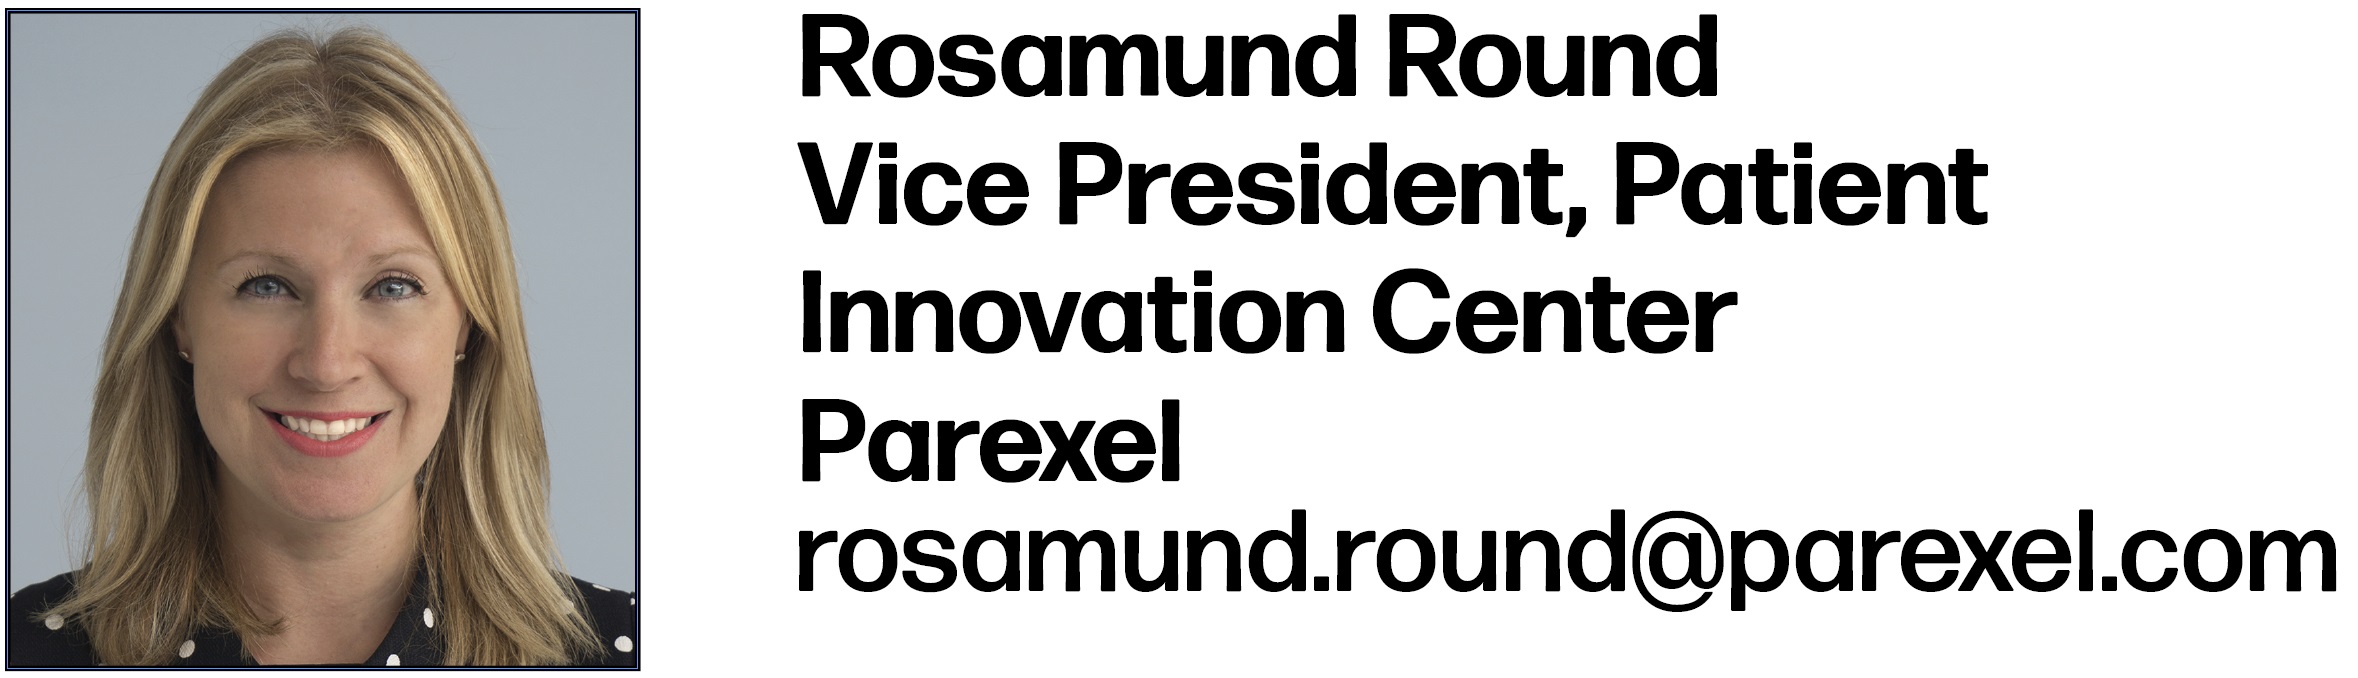 Rosamund Round Vice President, Patient Innovation Center Parexel rosamund.round@parexel.com 